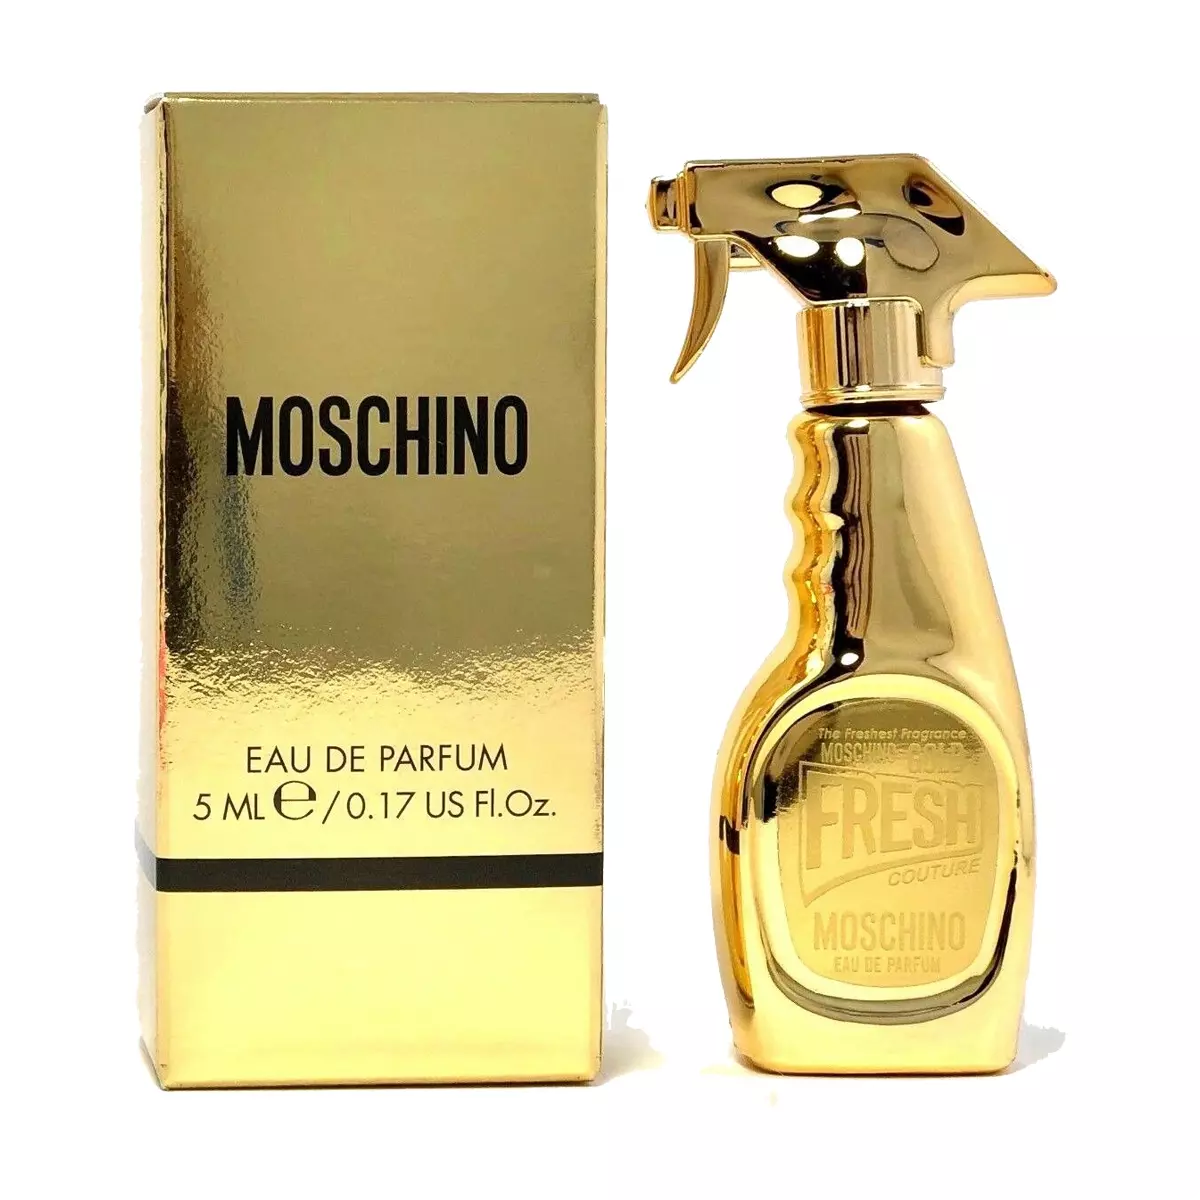 Moschino Fresh Gold 5мл. Moschino Gold Fresh Couture. Moschino Fresh Gold Eau de Parfum. Moschino Fresh Gold Lady Tester 100ml EDP.